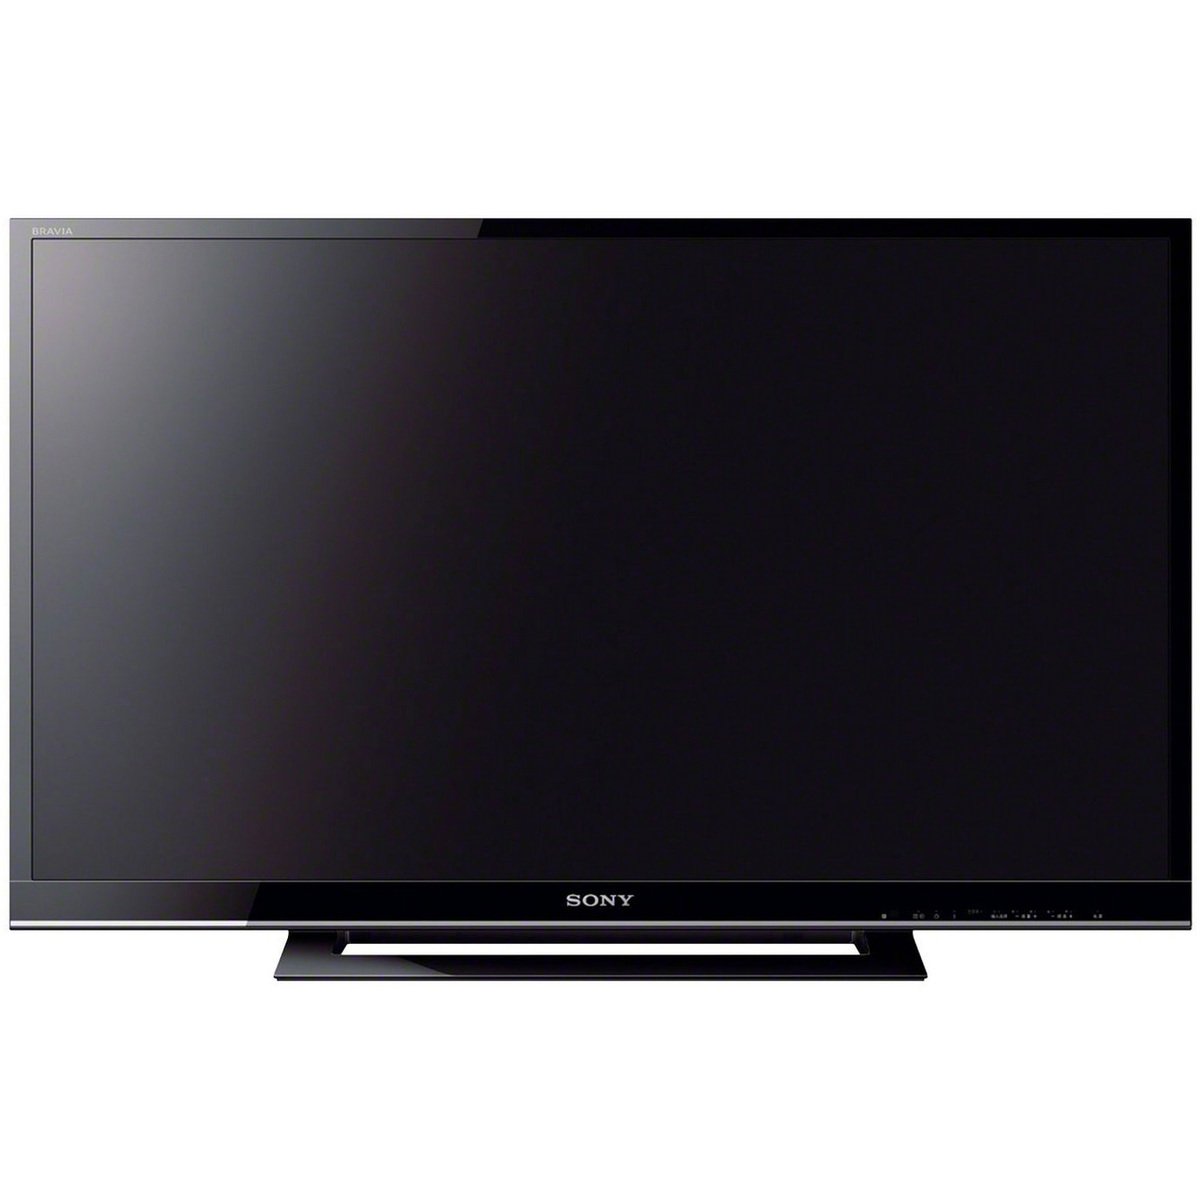 Sony LED TV KLV-32R302 32inch